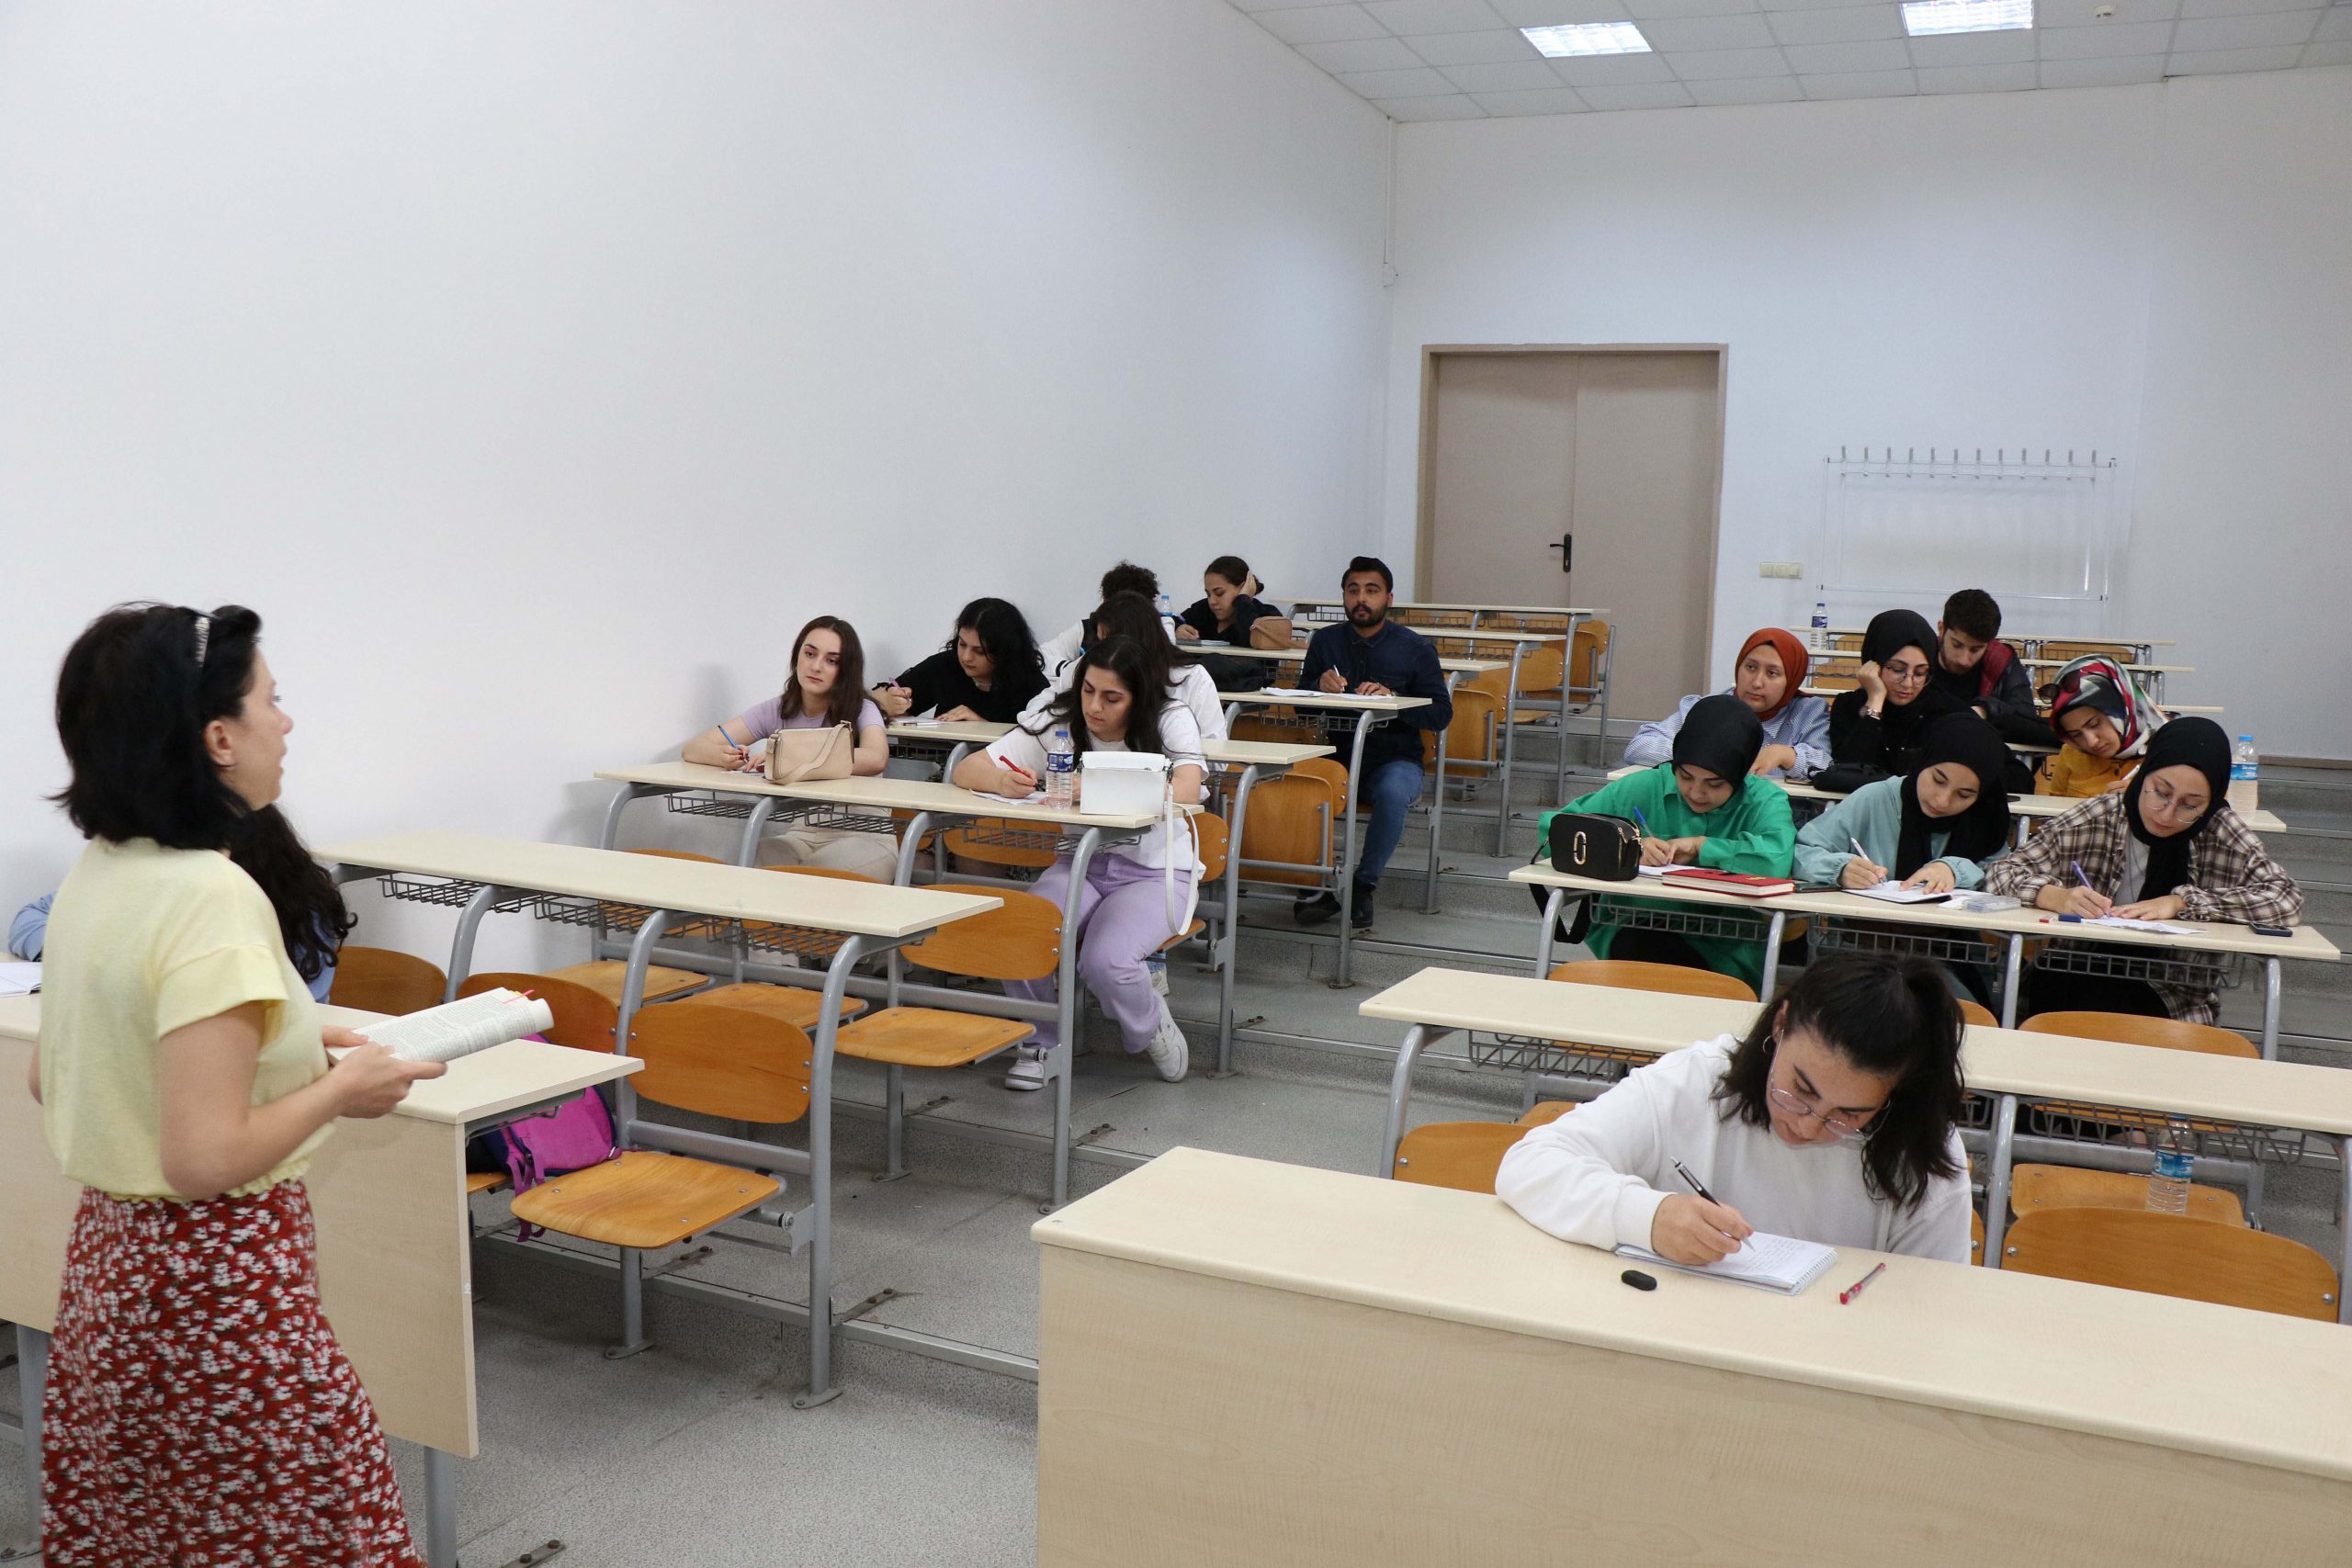 sinop universitesi find and study 11 - Université de Sinop